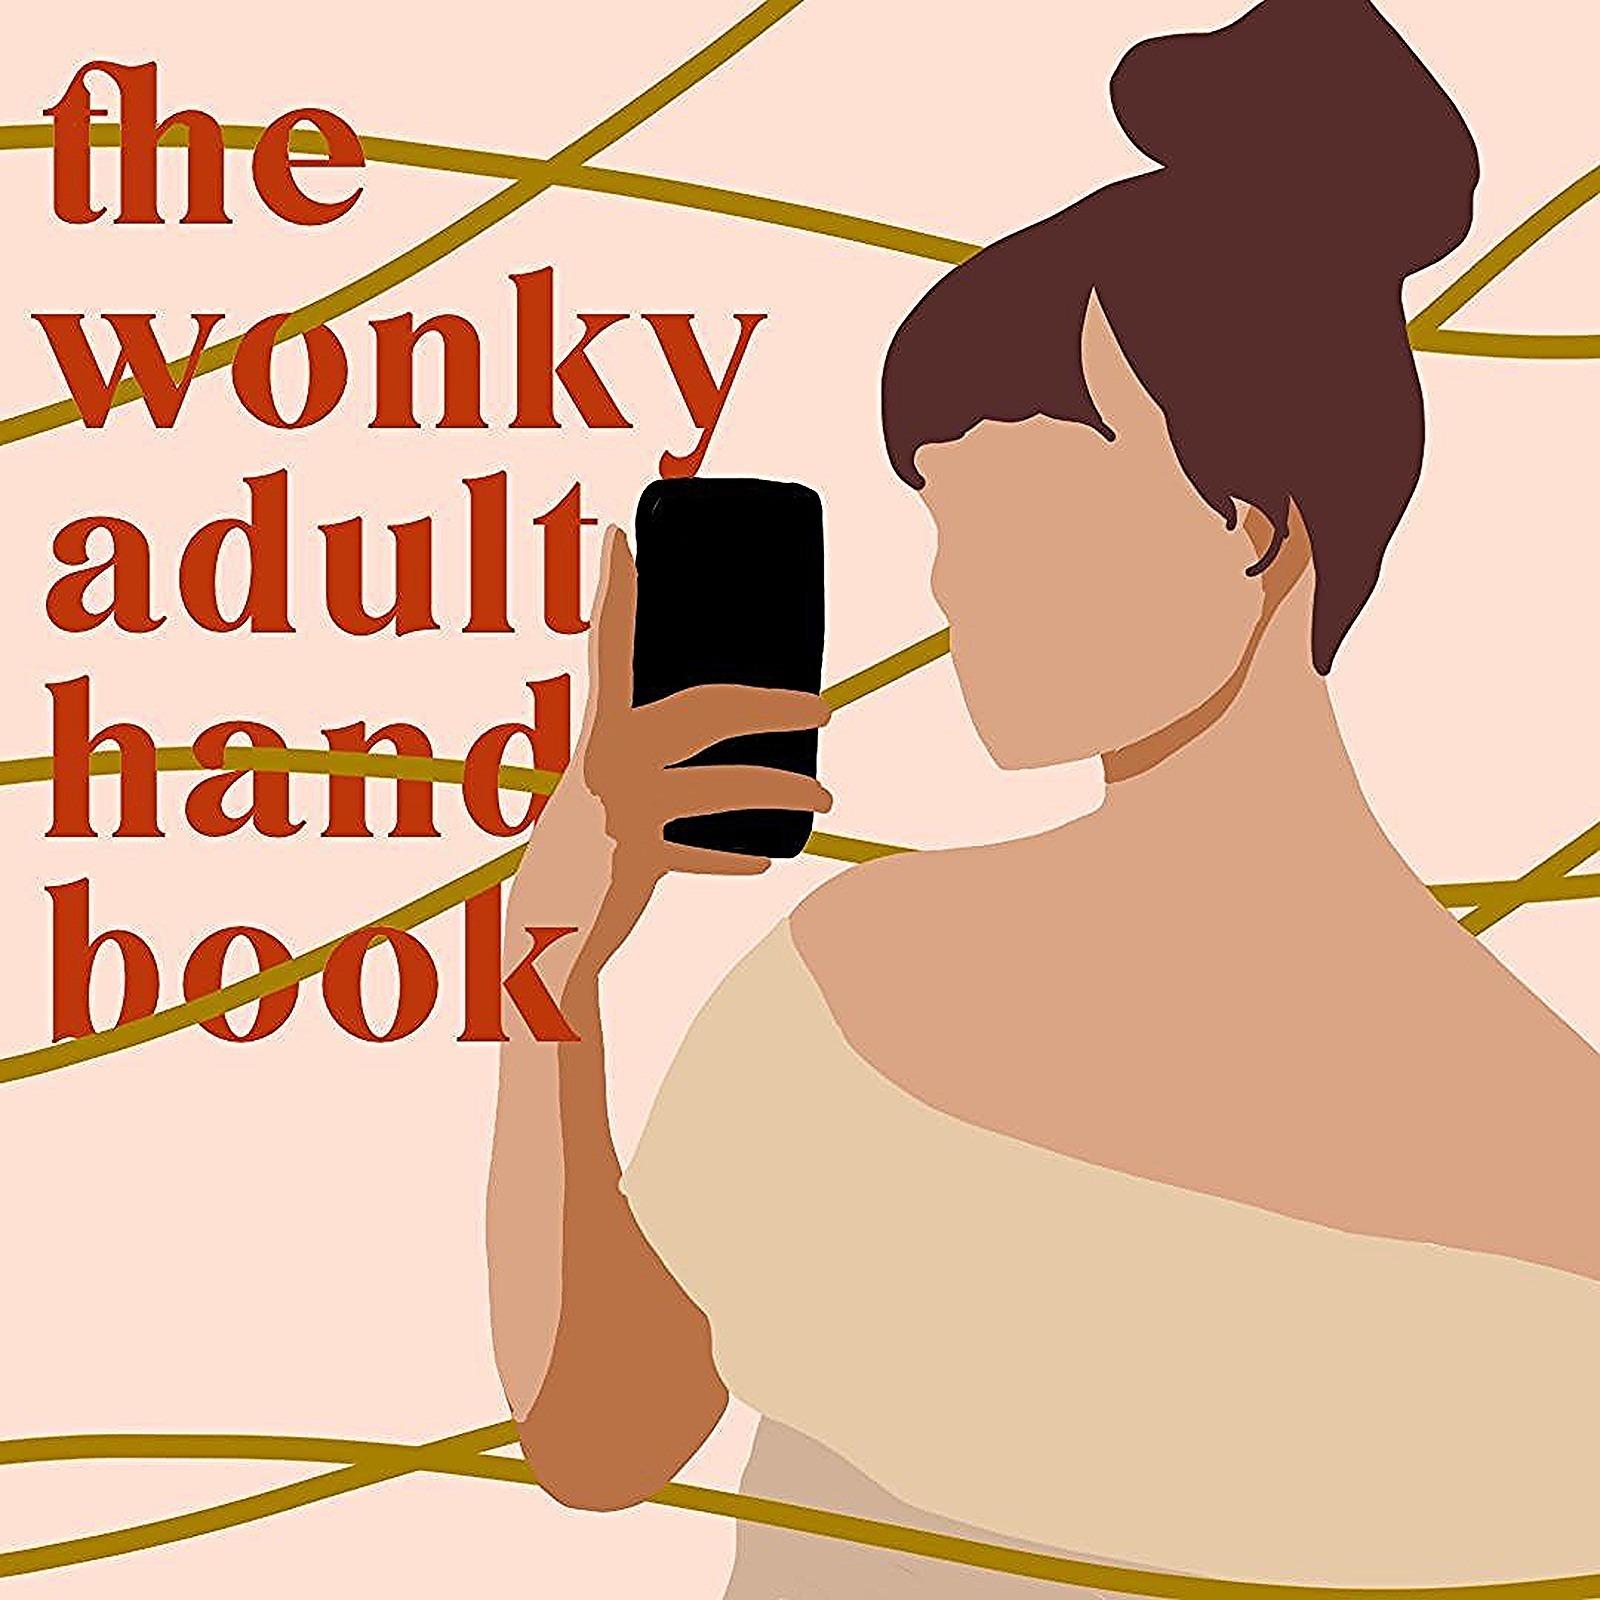 The Wonky Adult Handbook